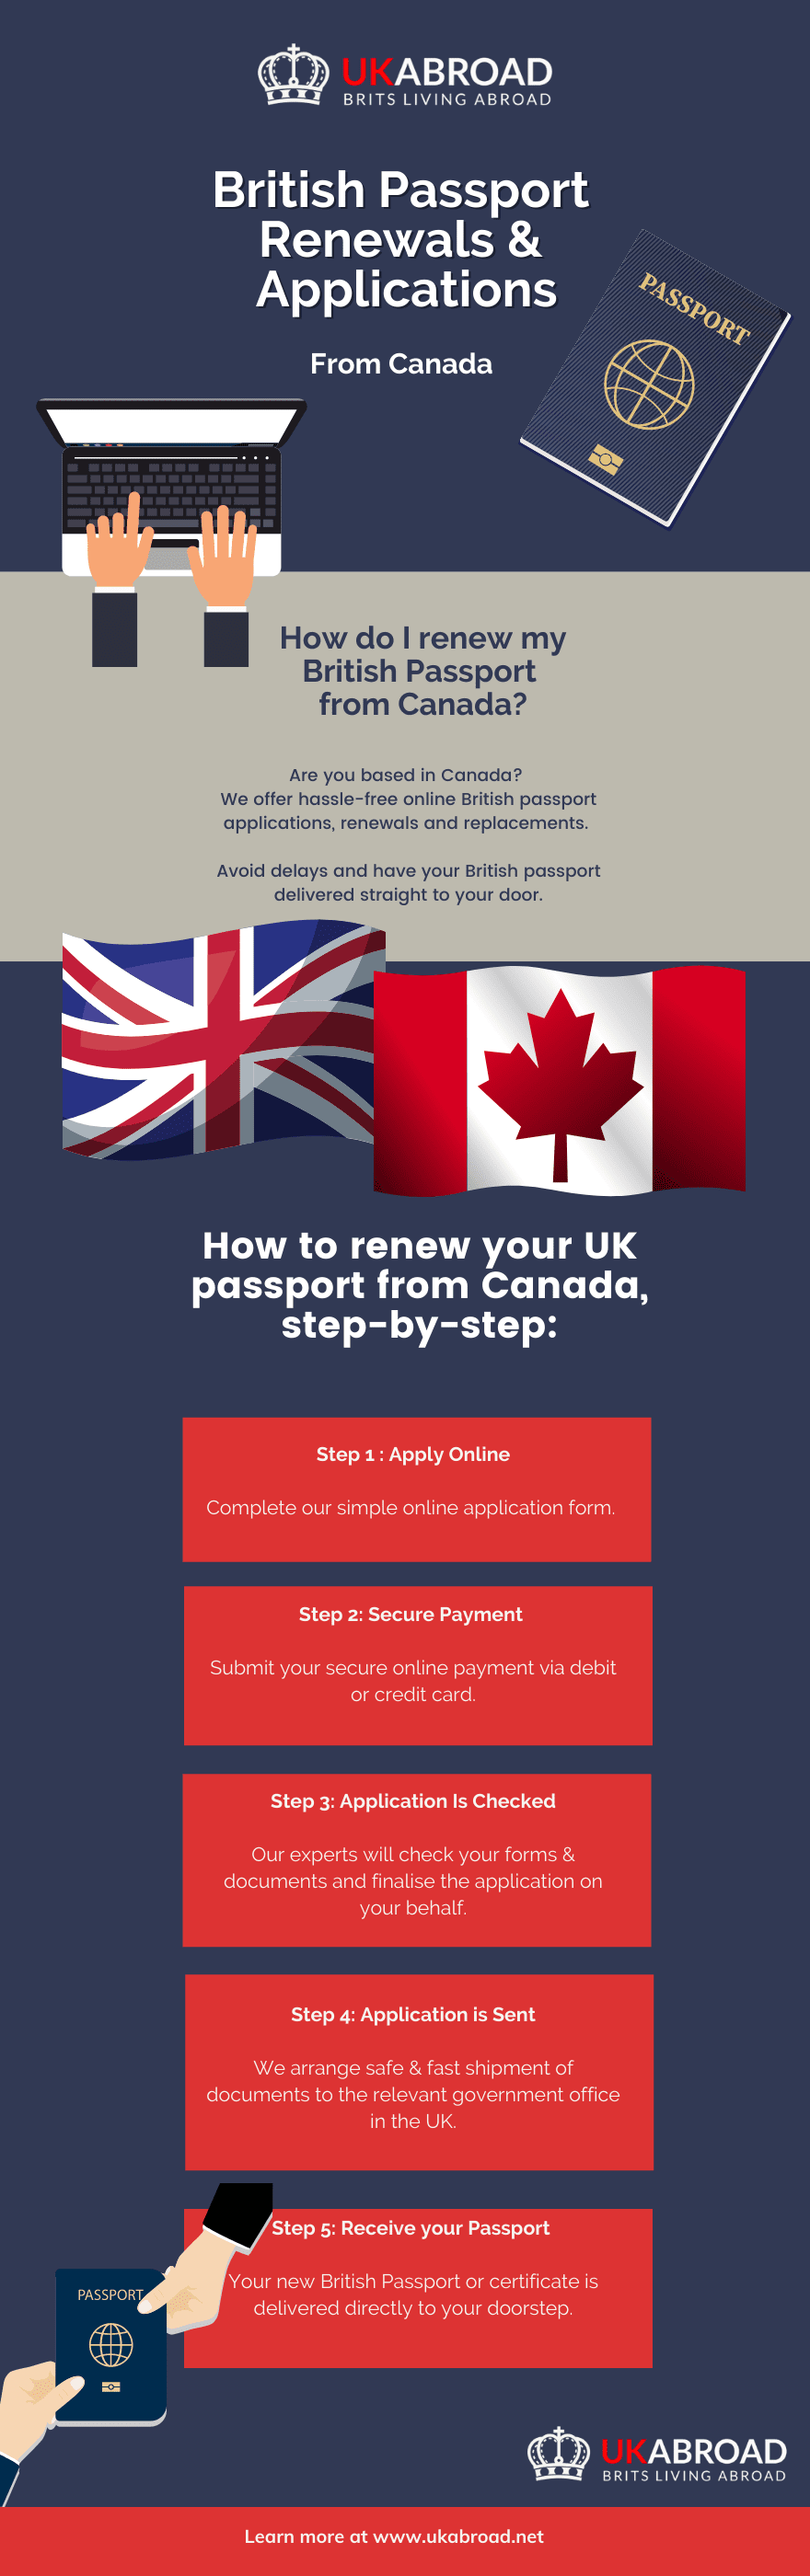 Uk passport renewals from Canada infographic